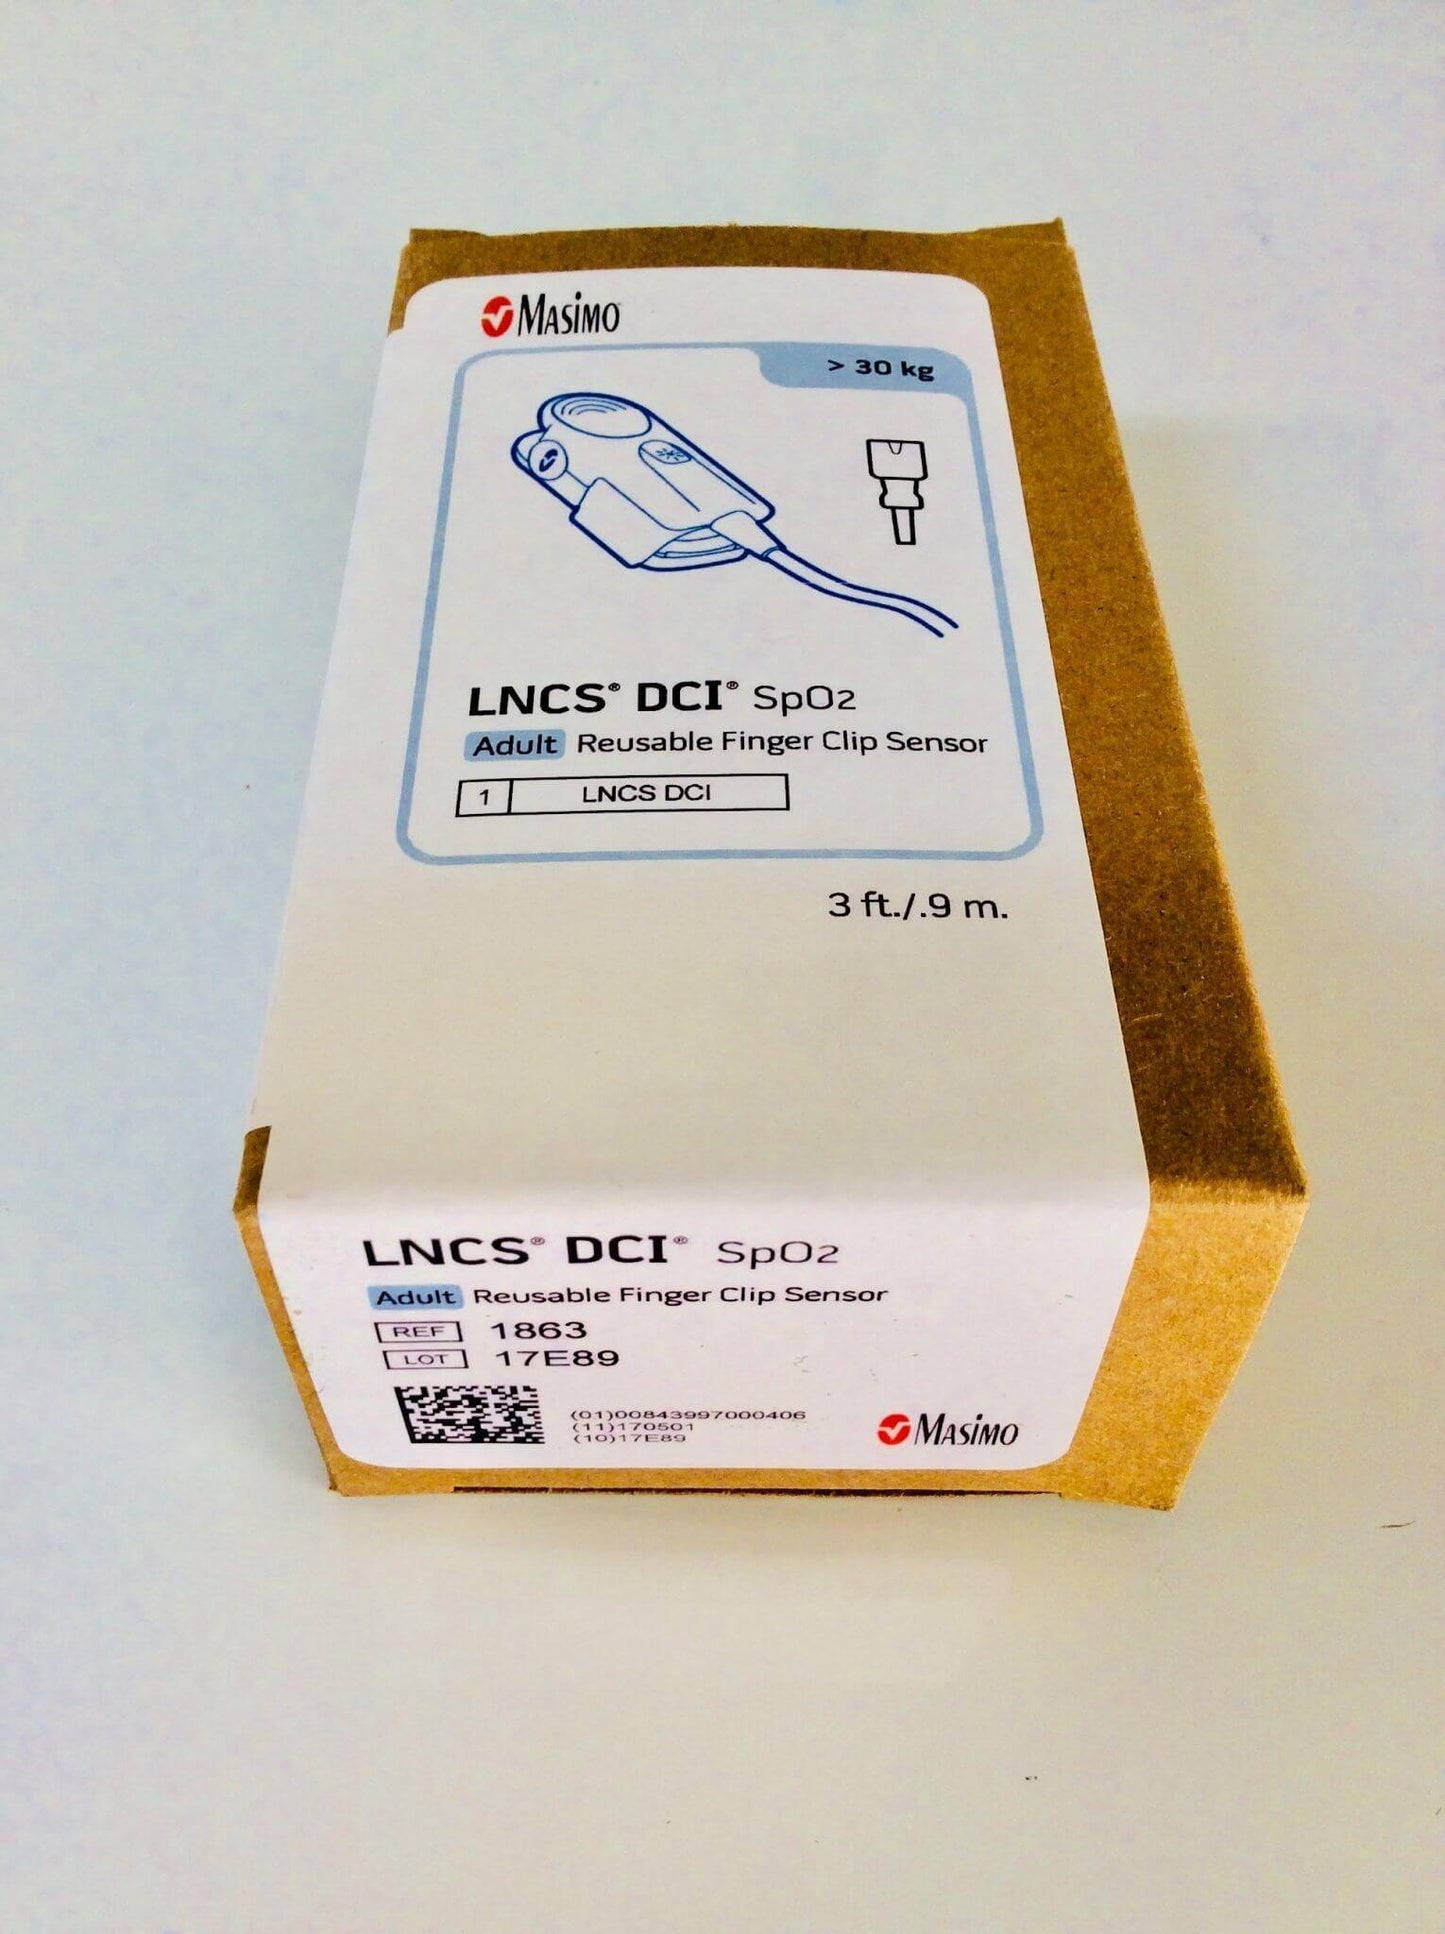 NEW Masimo LNCS DCI 3' Foot Reusable SpO2 9 Pin Finger Clip Sensor 1863 Warranty FREE Shipping - MBR Medicals